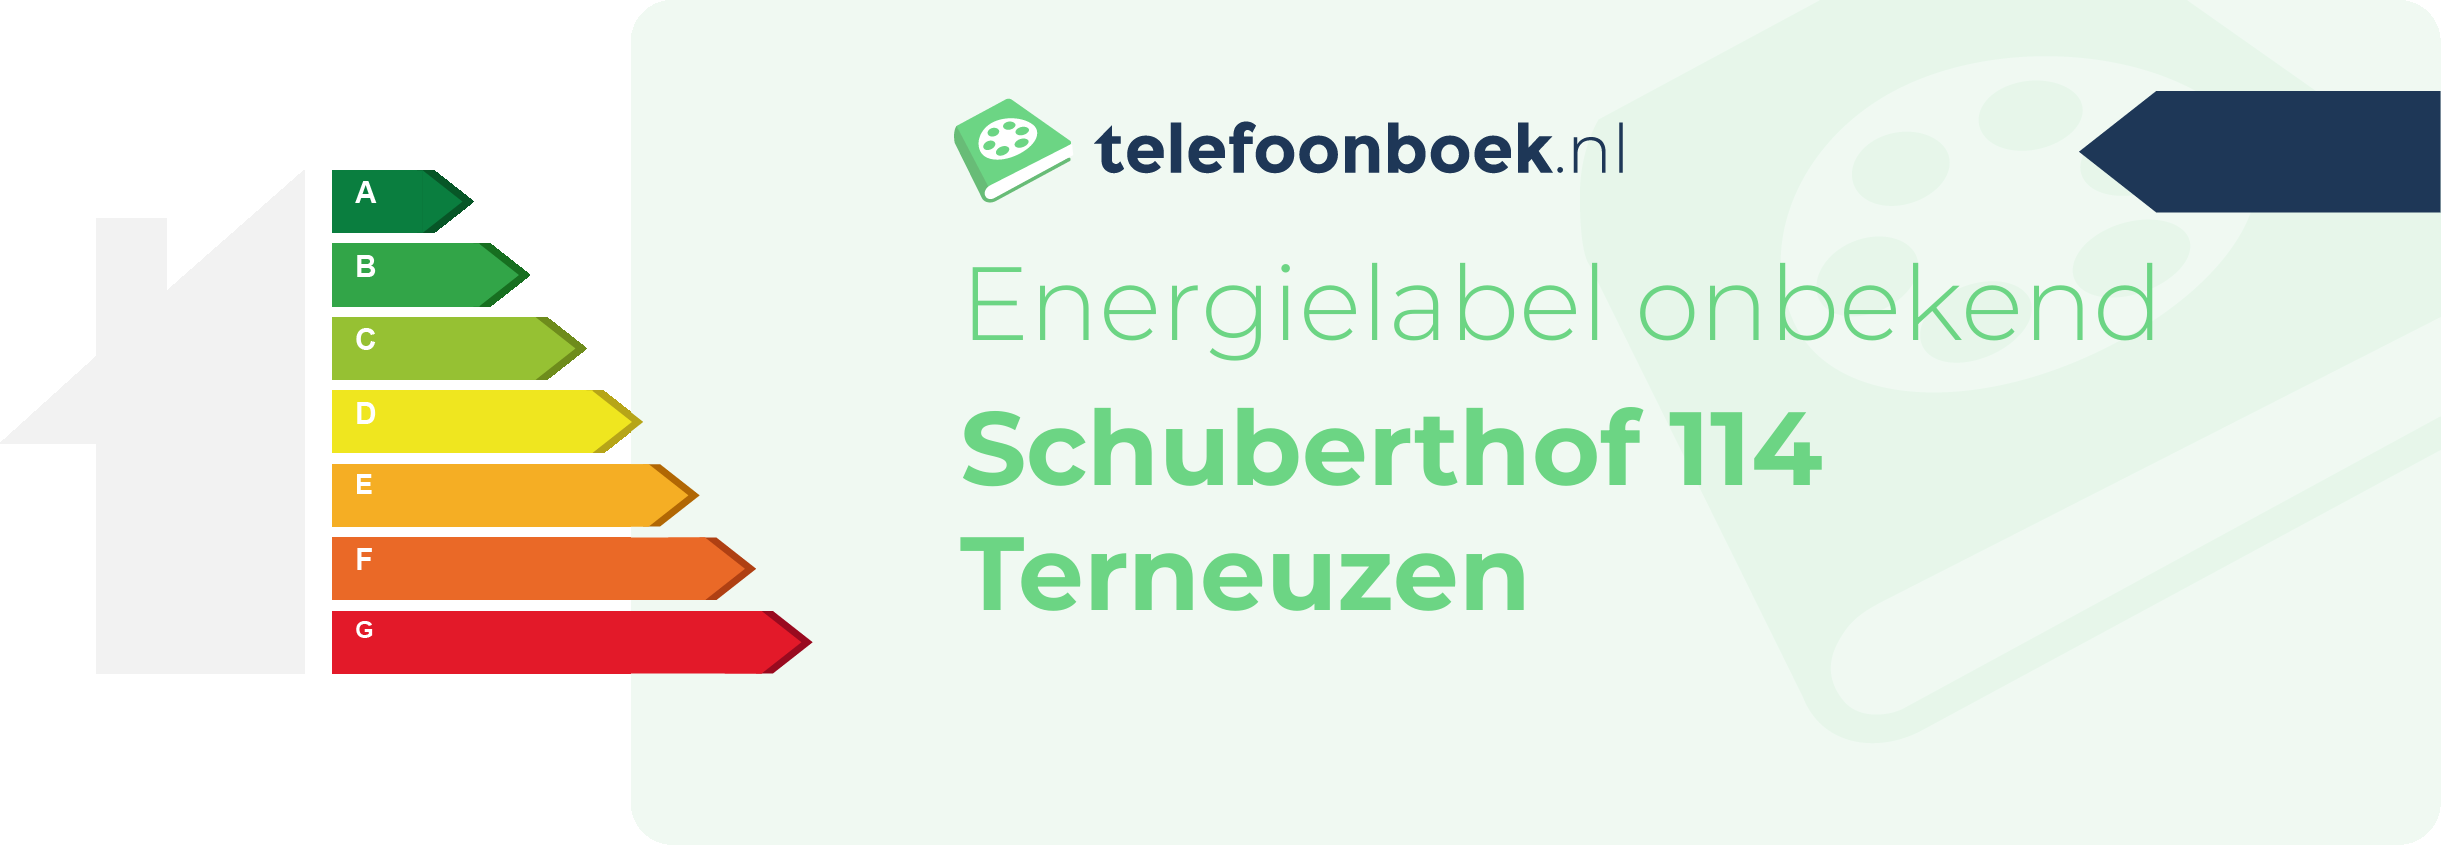 Energielabel Schuberthof 114 Terneuzen